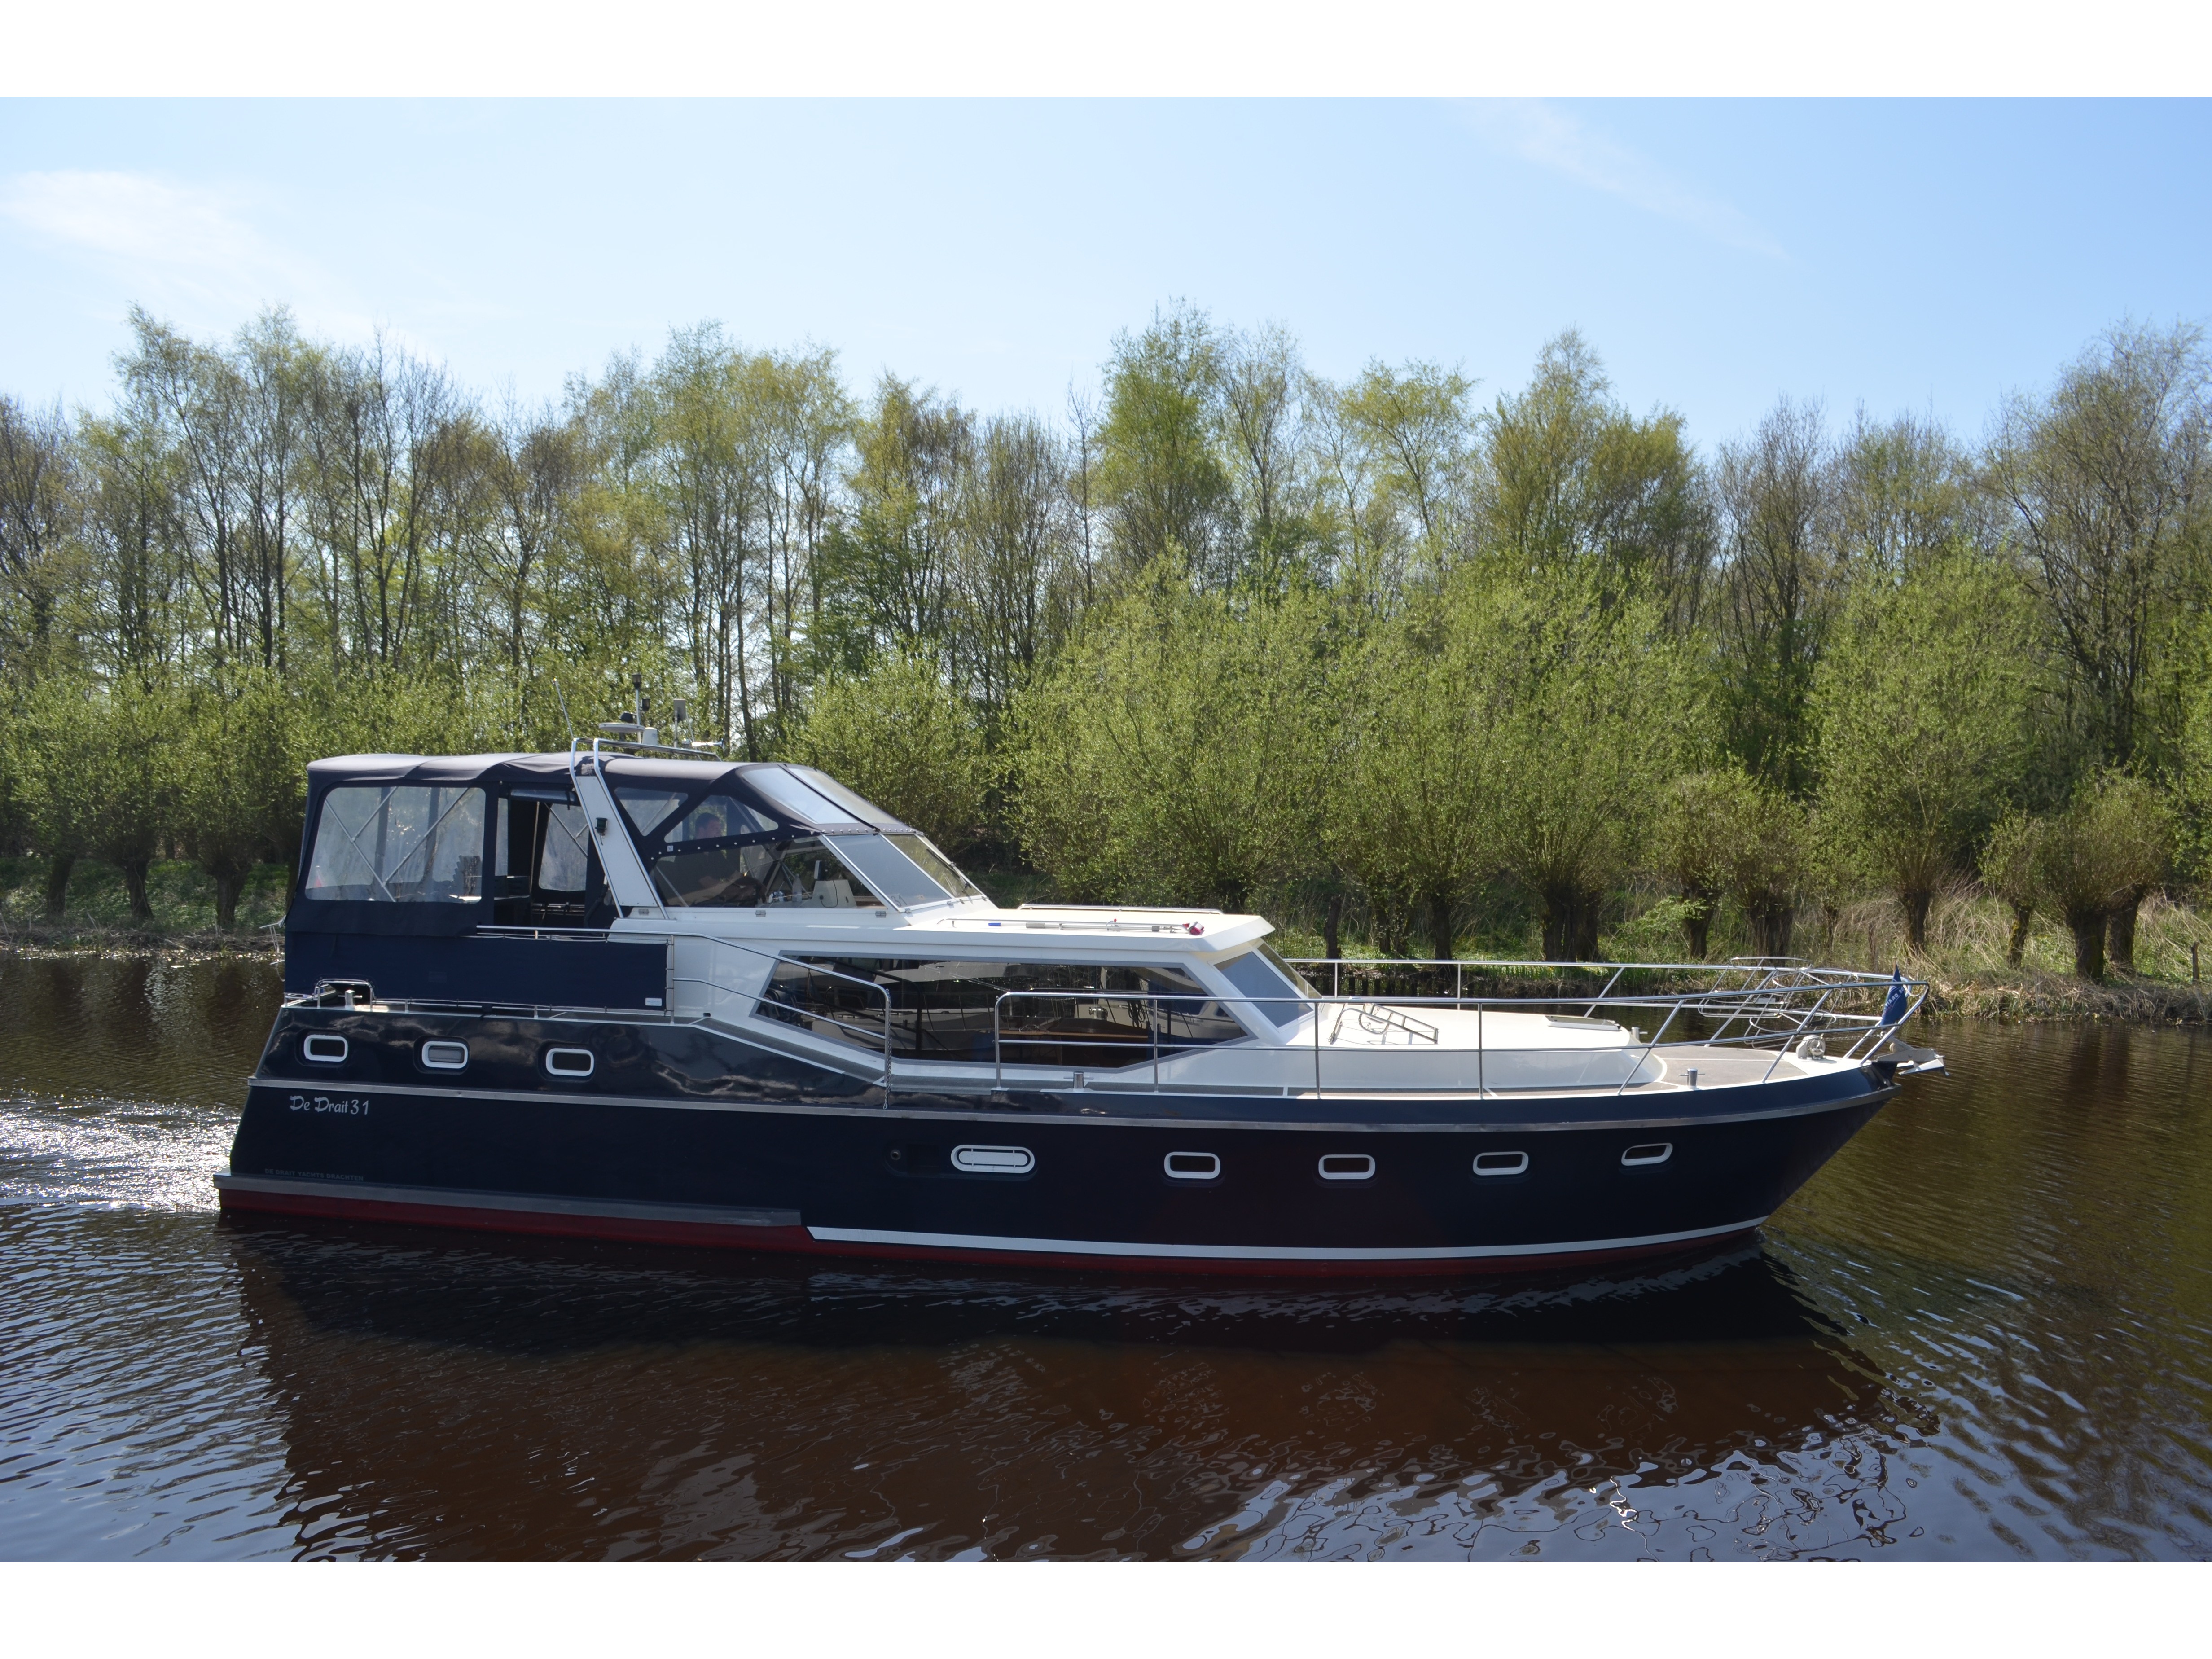 45 - Yacht Charter Drachten & Boat hire in Netherlands Drachten Jachthaven Drachten de Drait 1